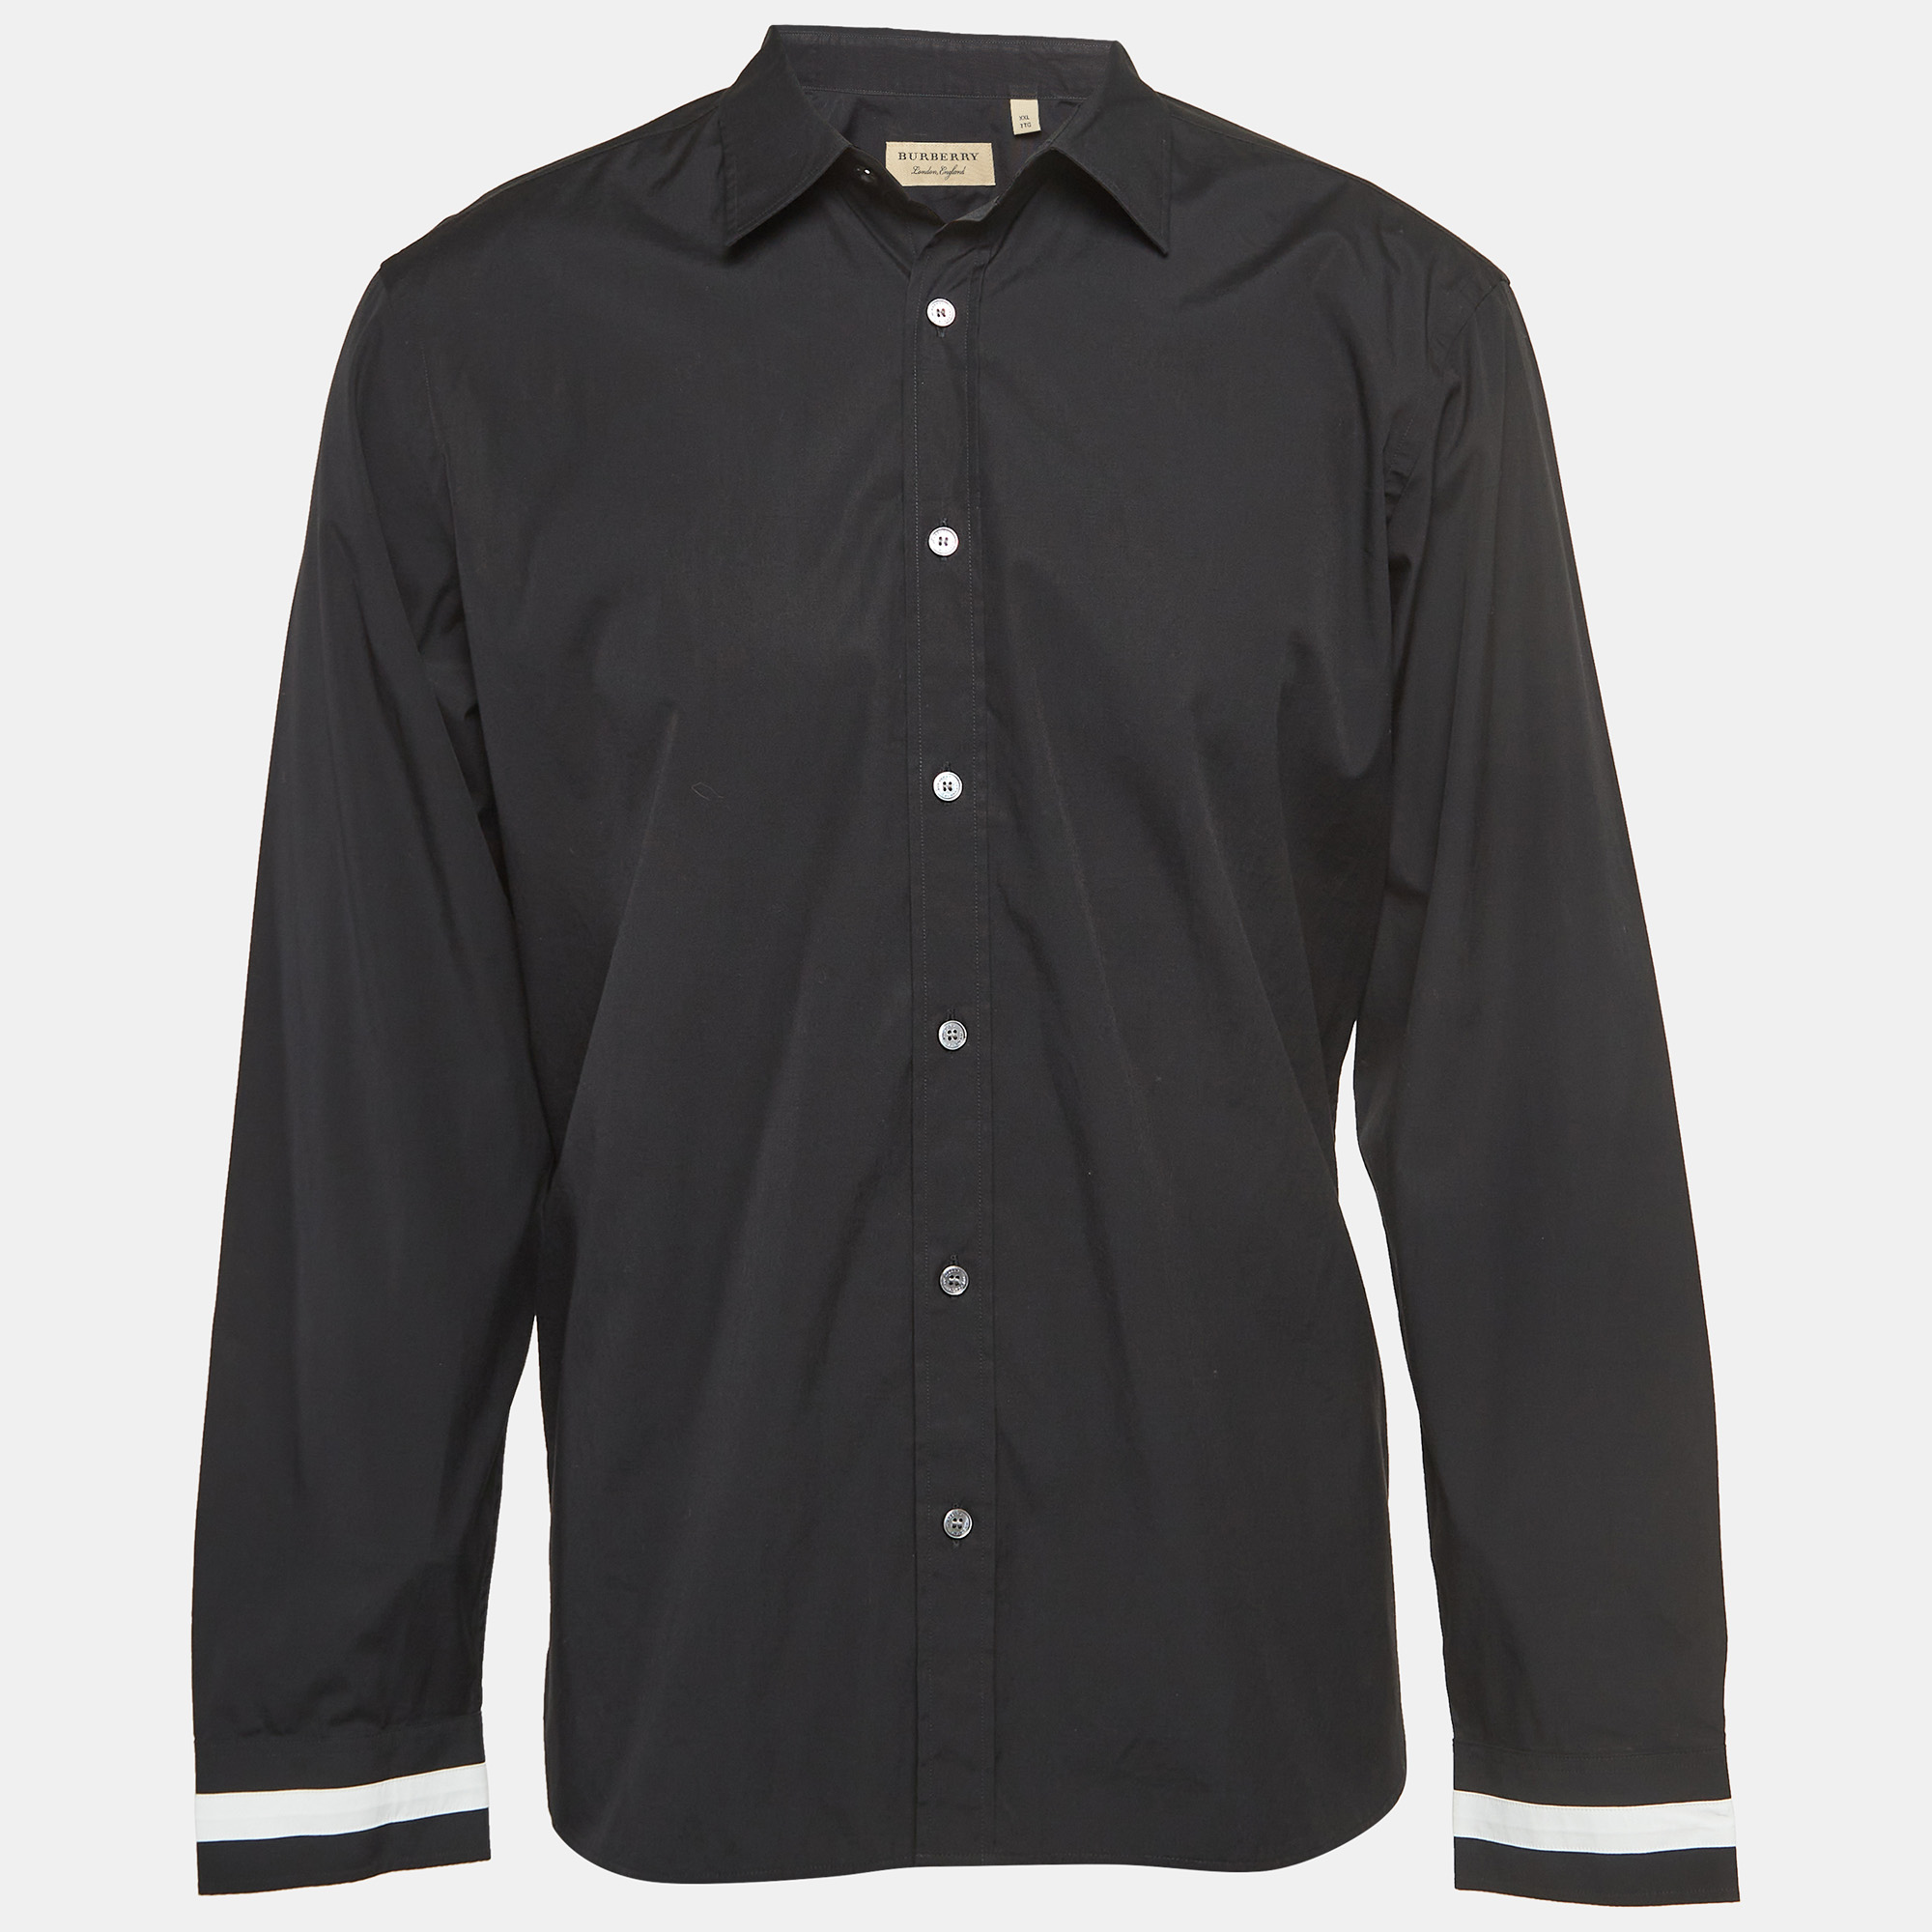 Burberry london black contrast cuff cotton long sleeve shirt xxl